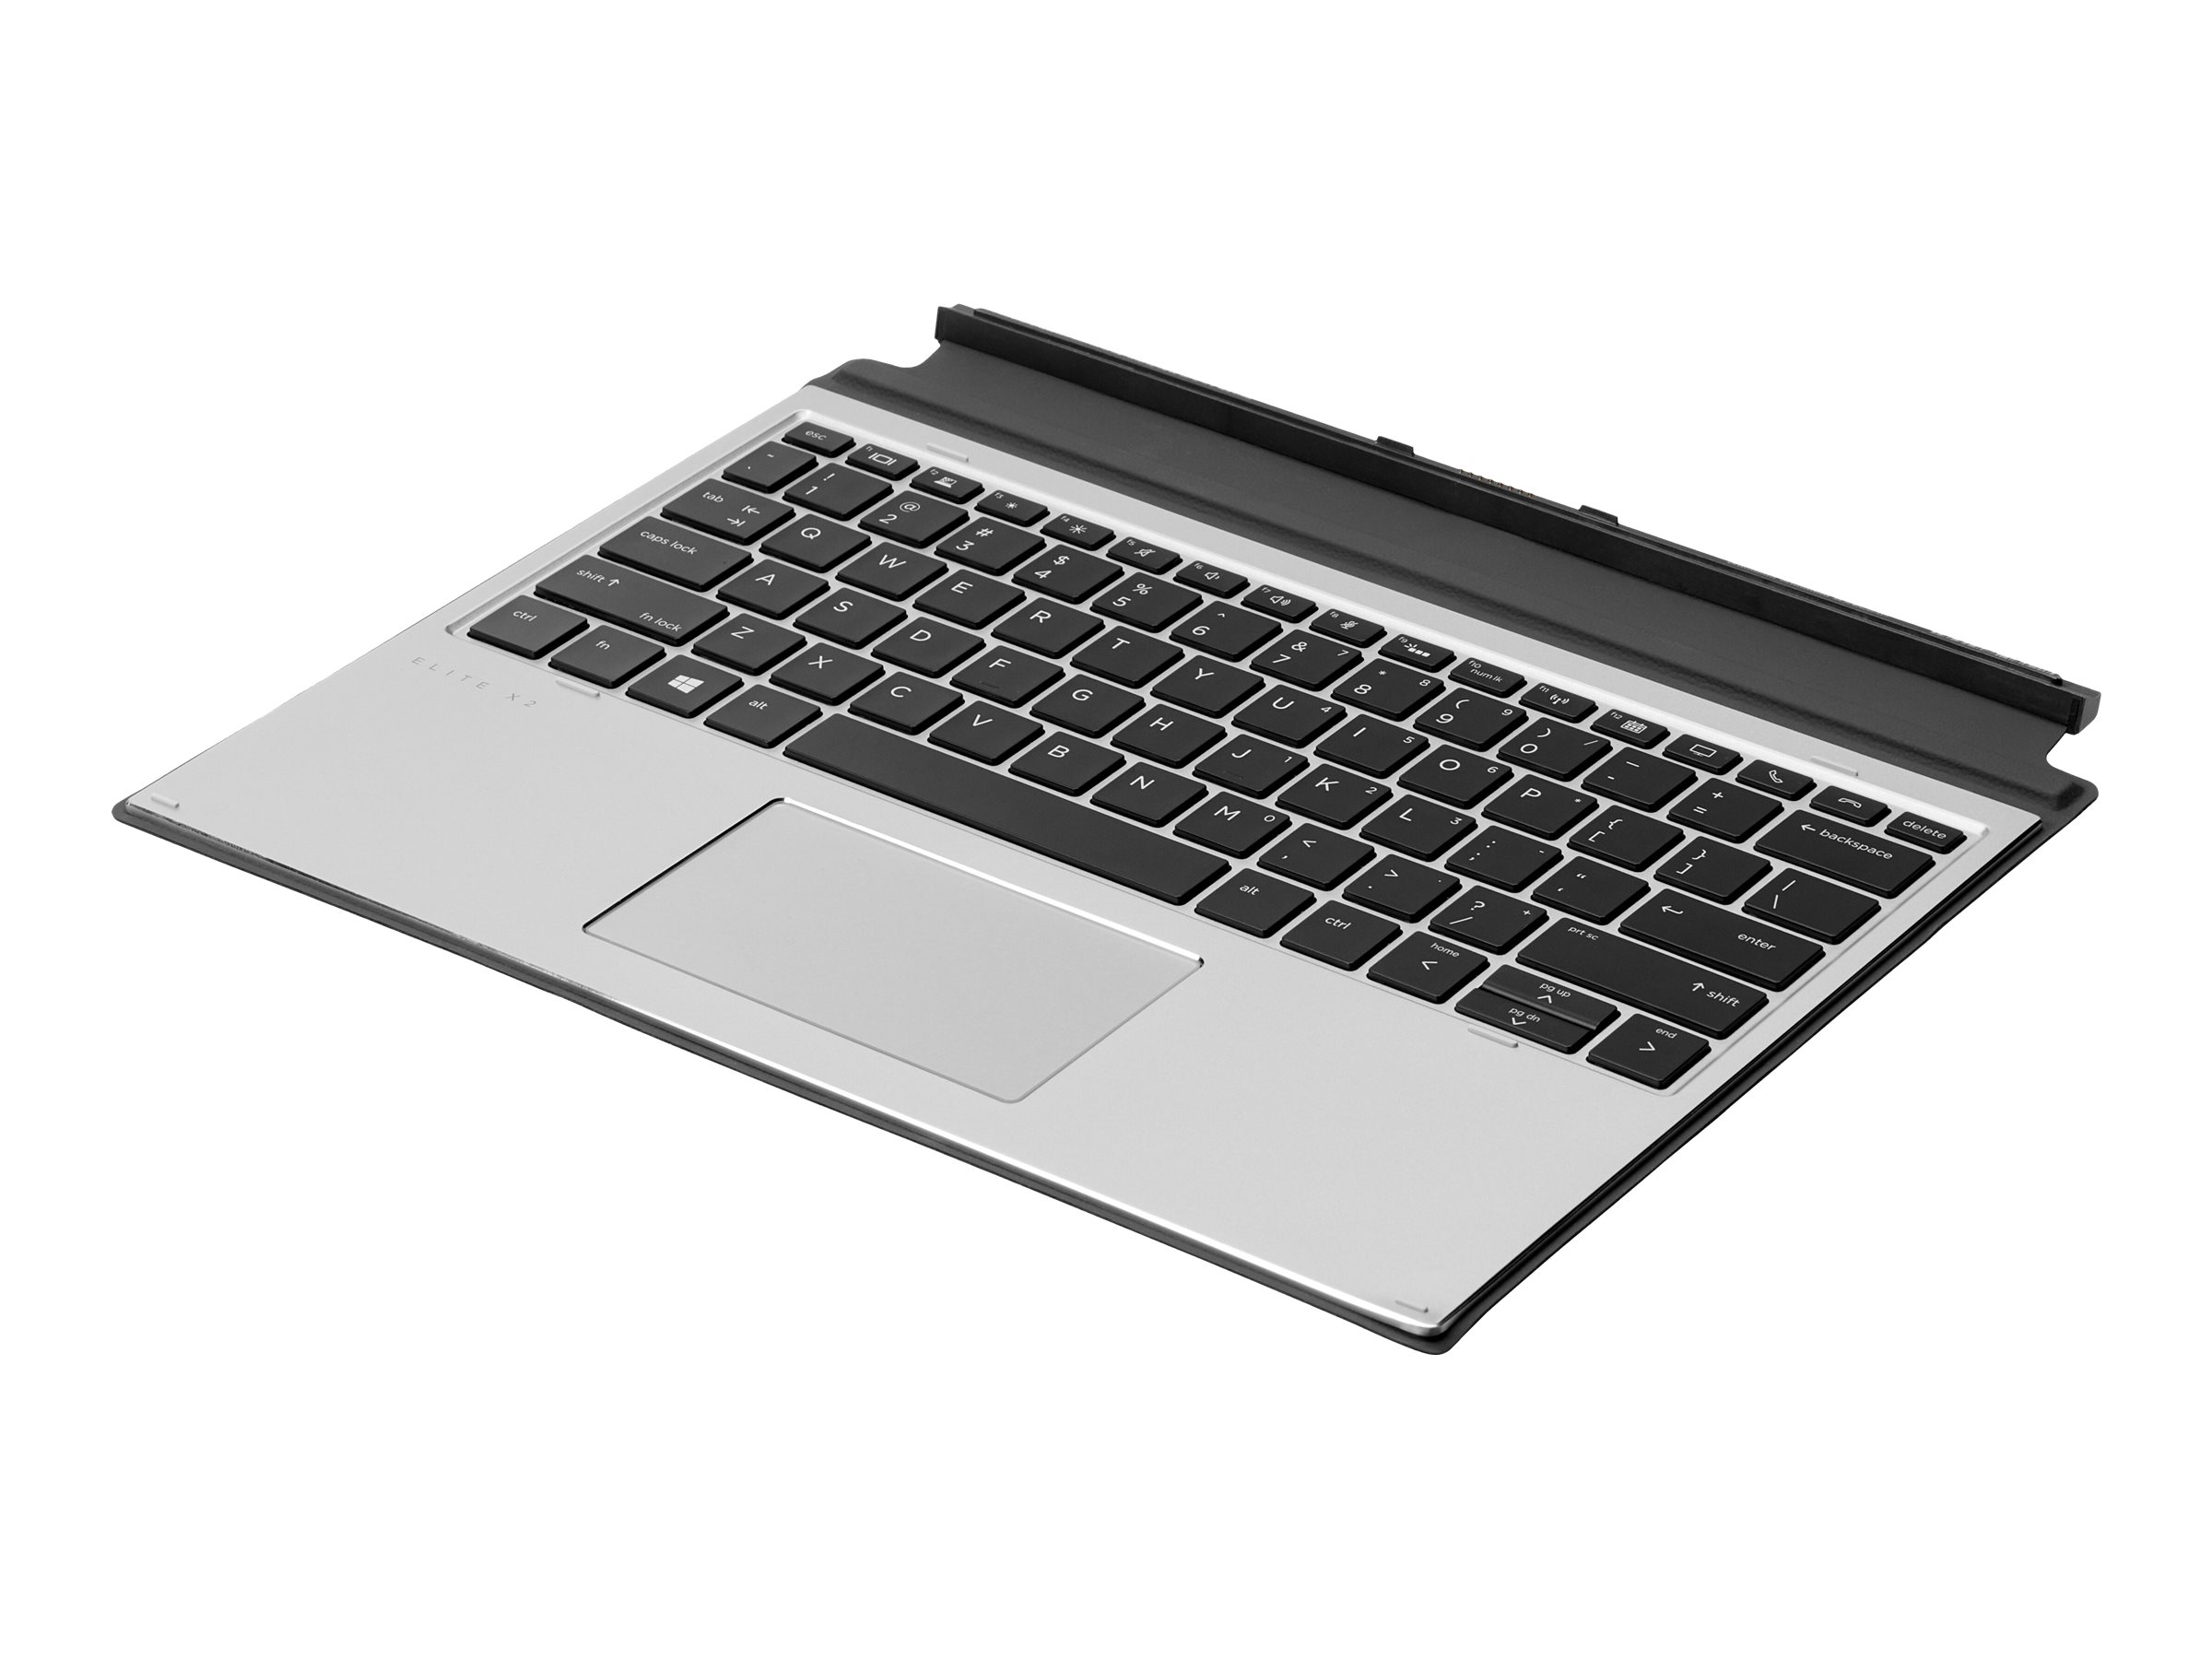 EliteBook 840 G6 Healthcare Edition Notebook PC